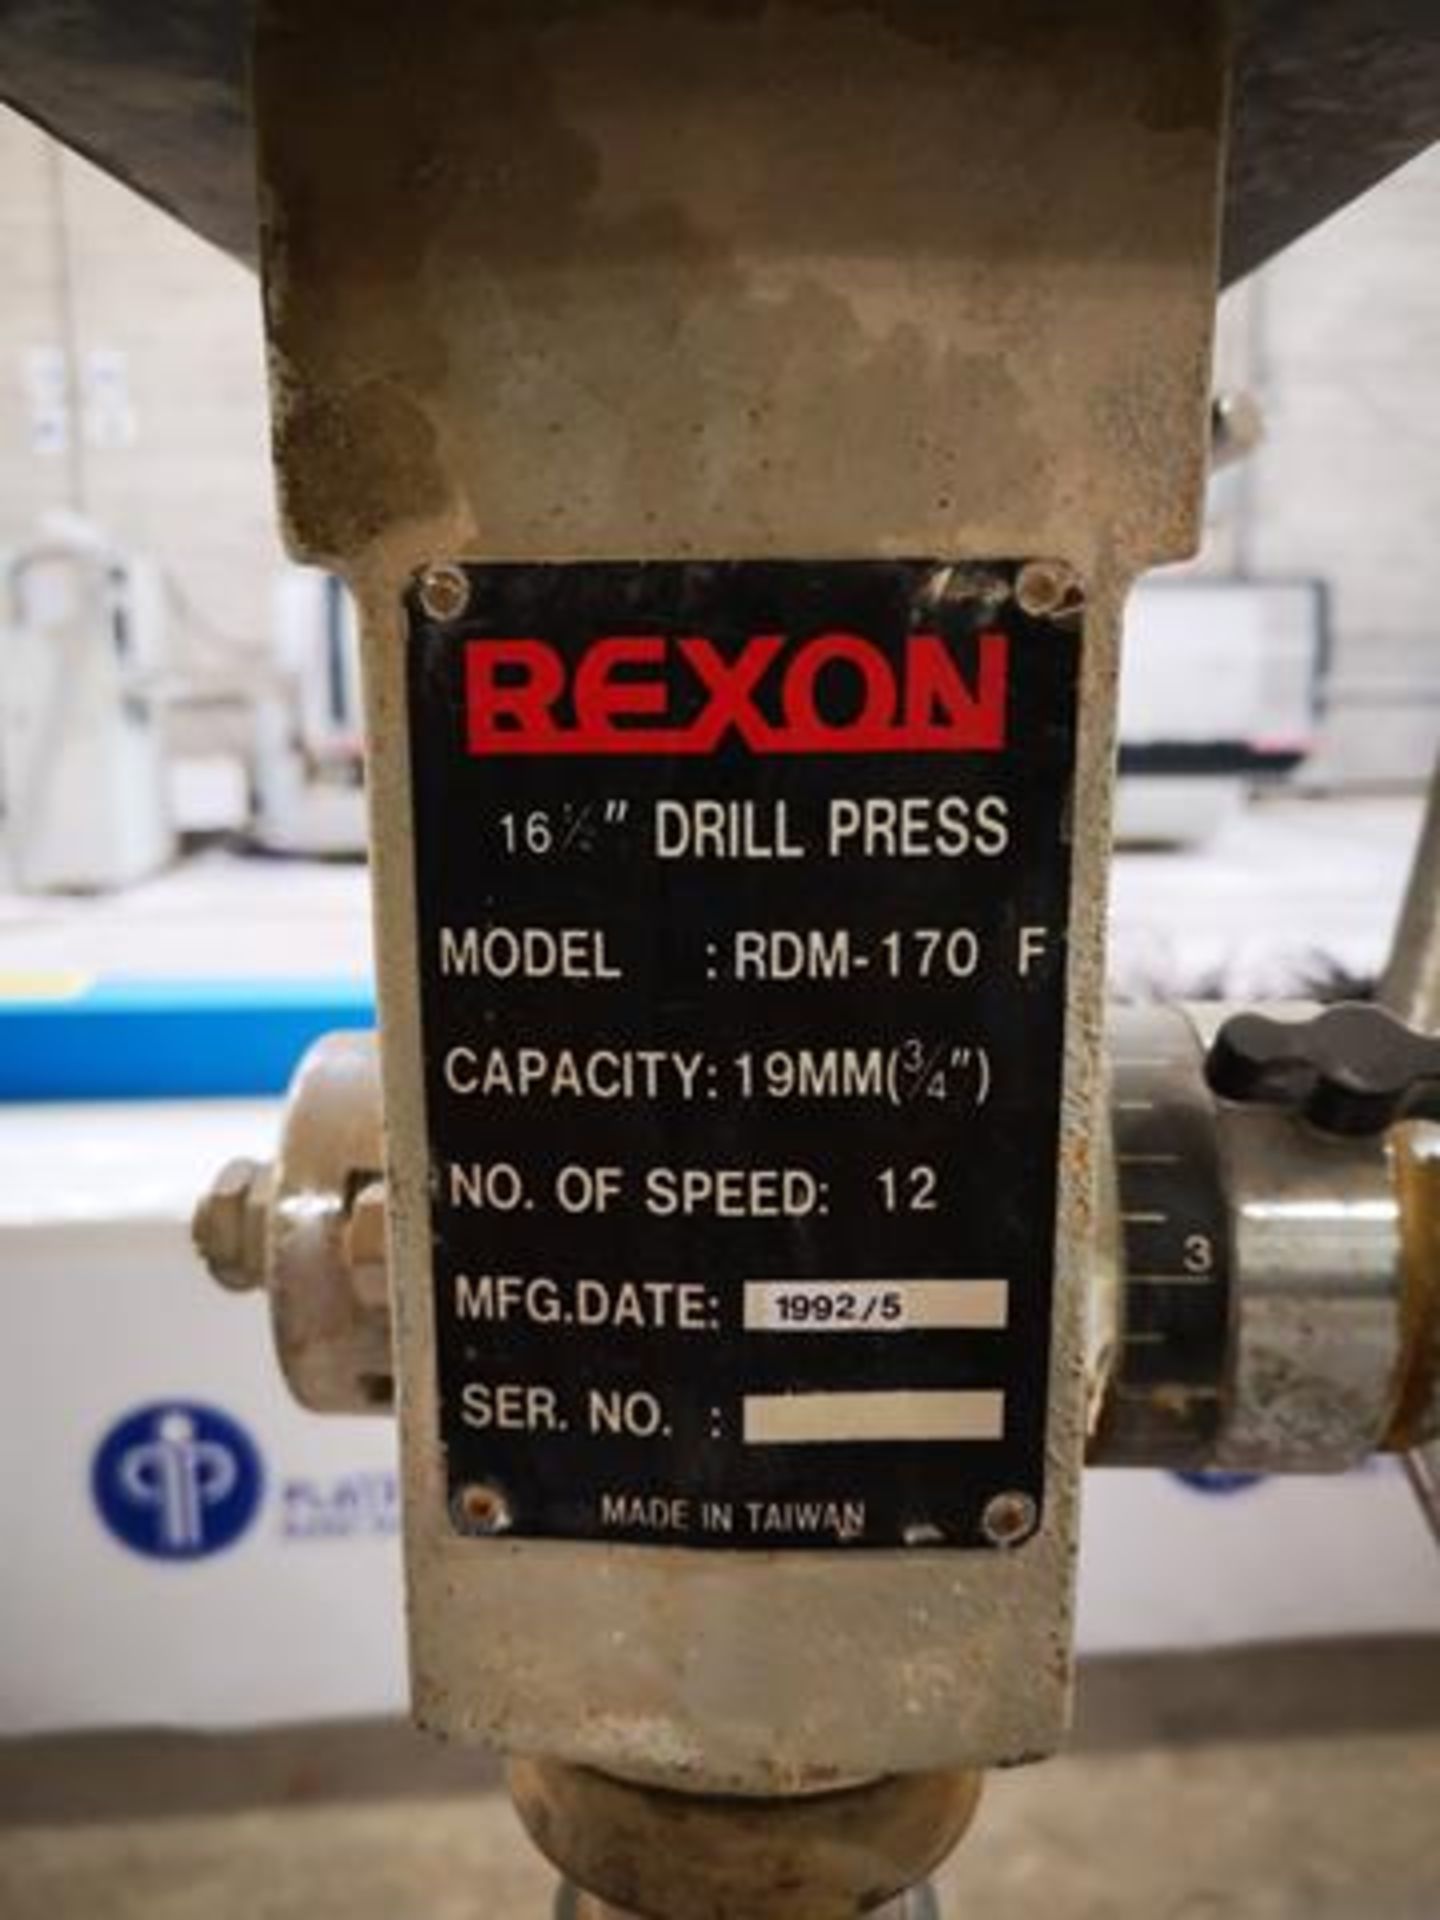 BEXON, RDM-170F, 16.5", 12 SPEED, PEDESTAL DRILL PRESS - Image 3 of 3